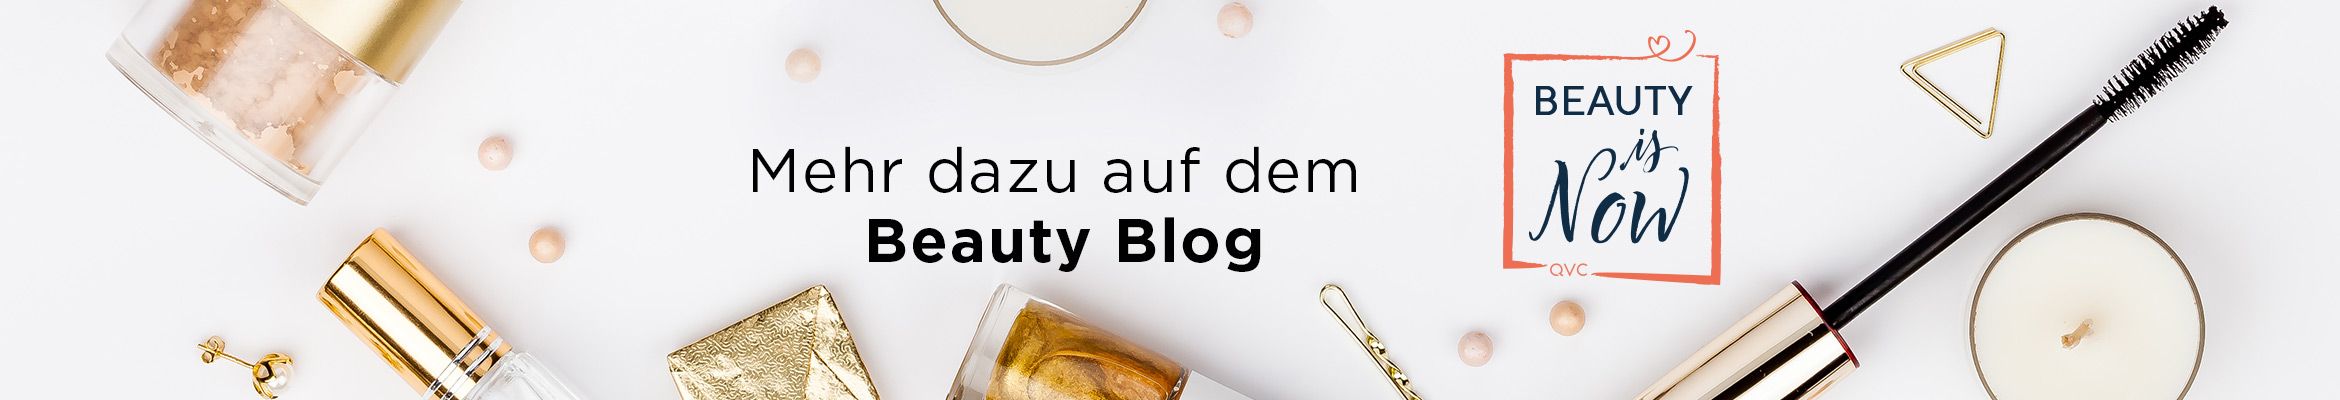 Beauty Blog Beitrag